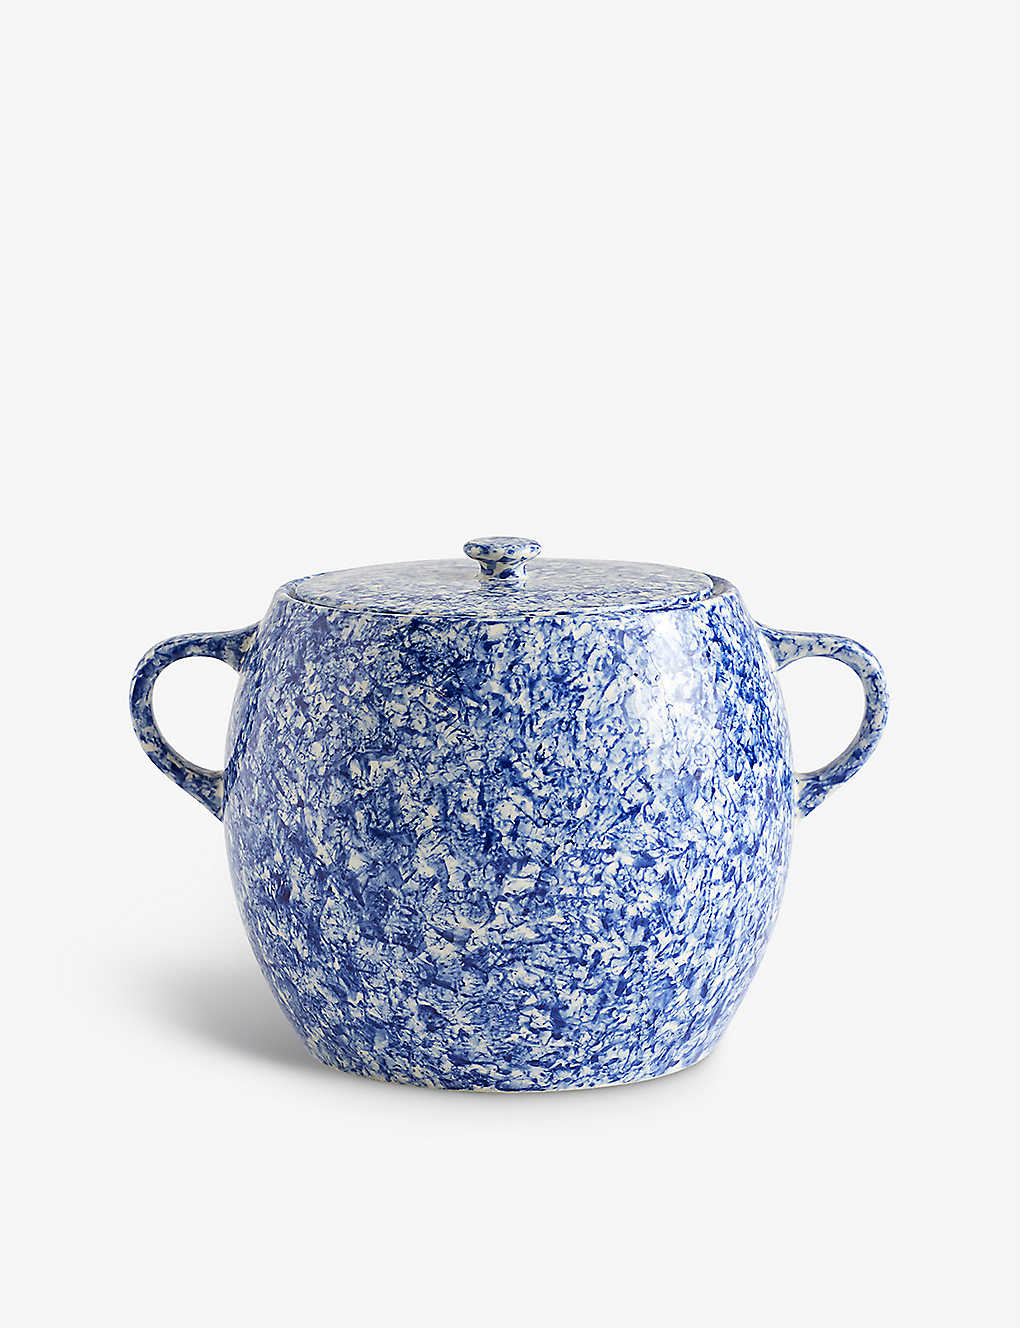 HAY ソブレメサ ペイントデザイン 磁器ビーンポット 17.5cm Sobremesa painted-design stoneware bean pot 17.5cm BLUE